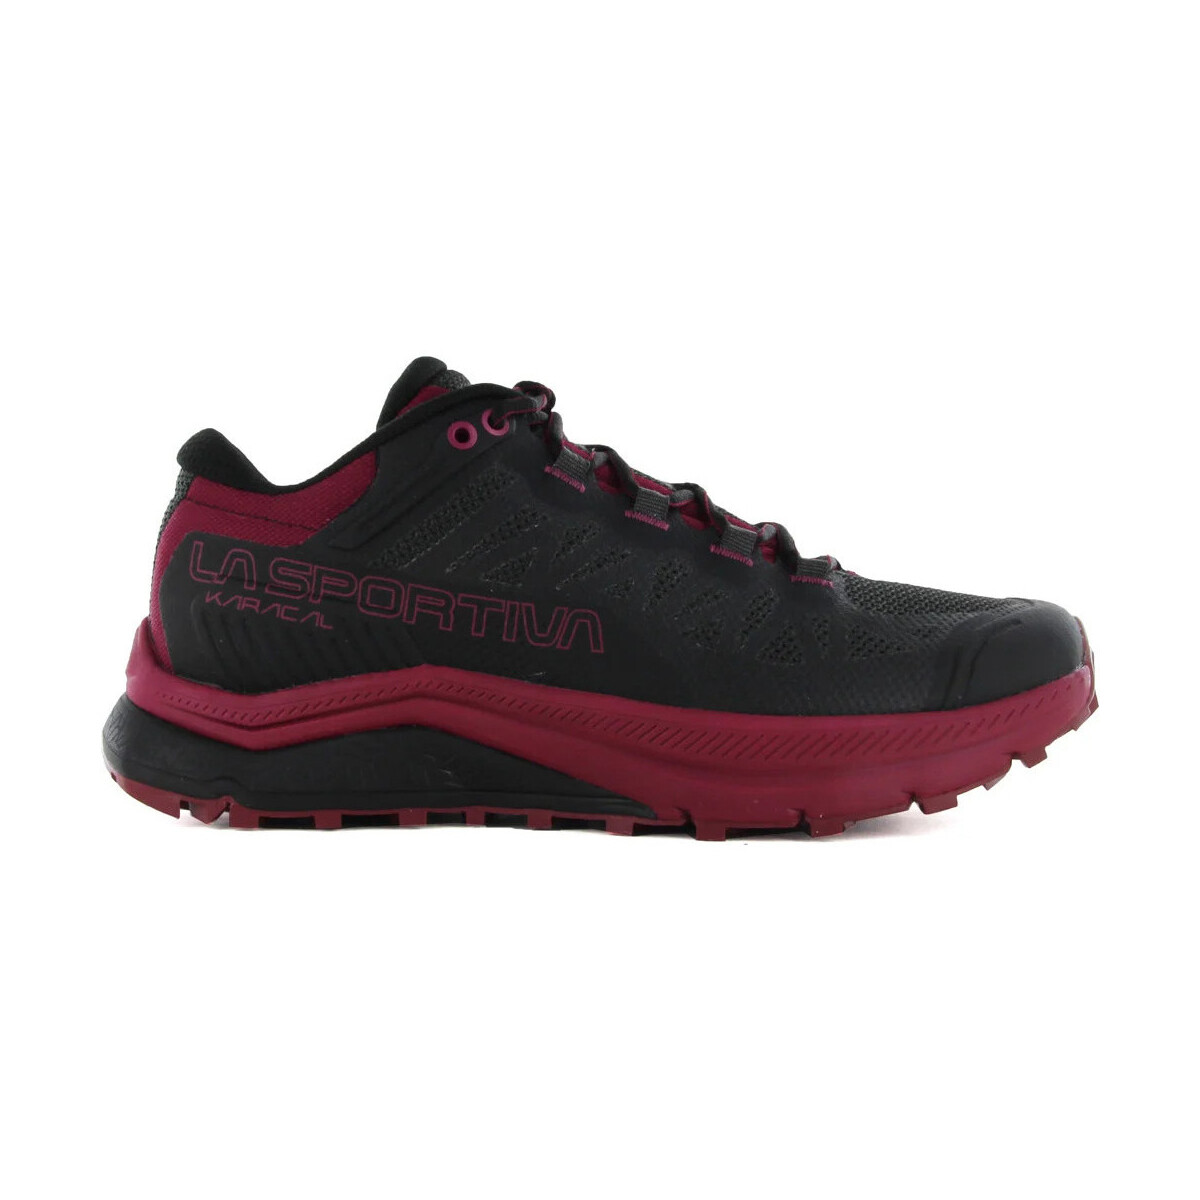 Zapatos Mujer Running / trail La Sportiva KARACAL W Negro